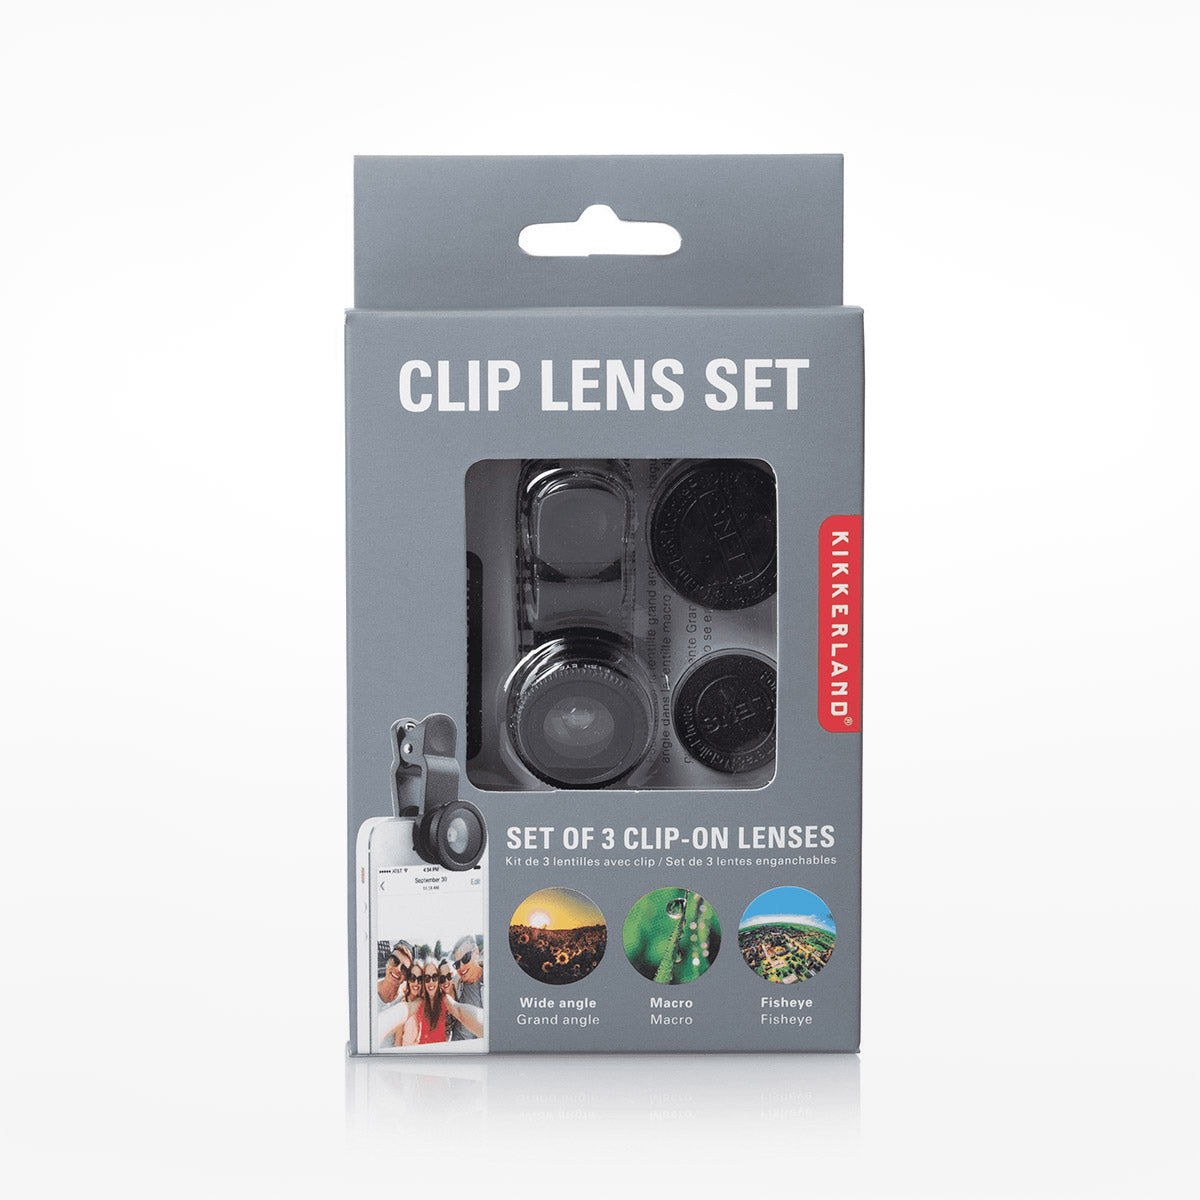 3-in-1 clip lens set